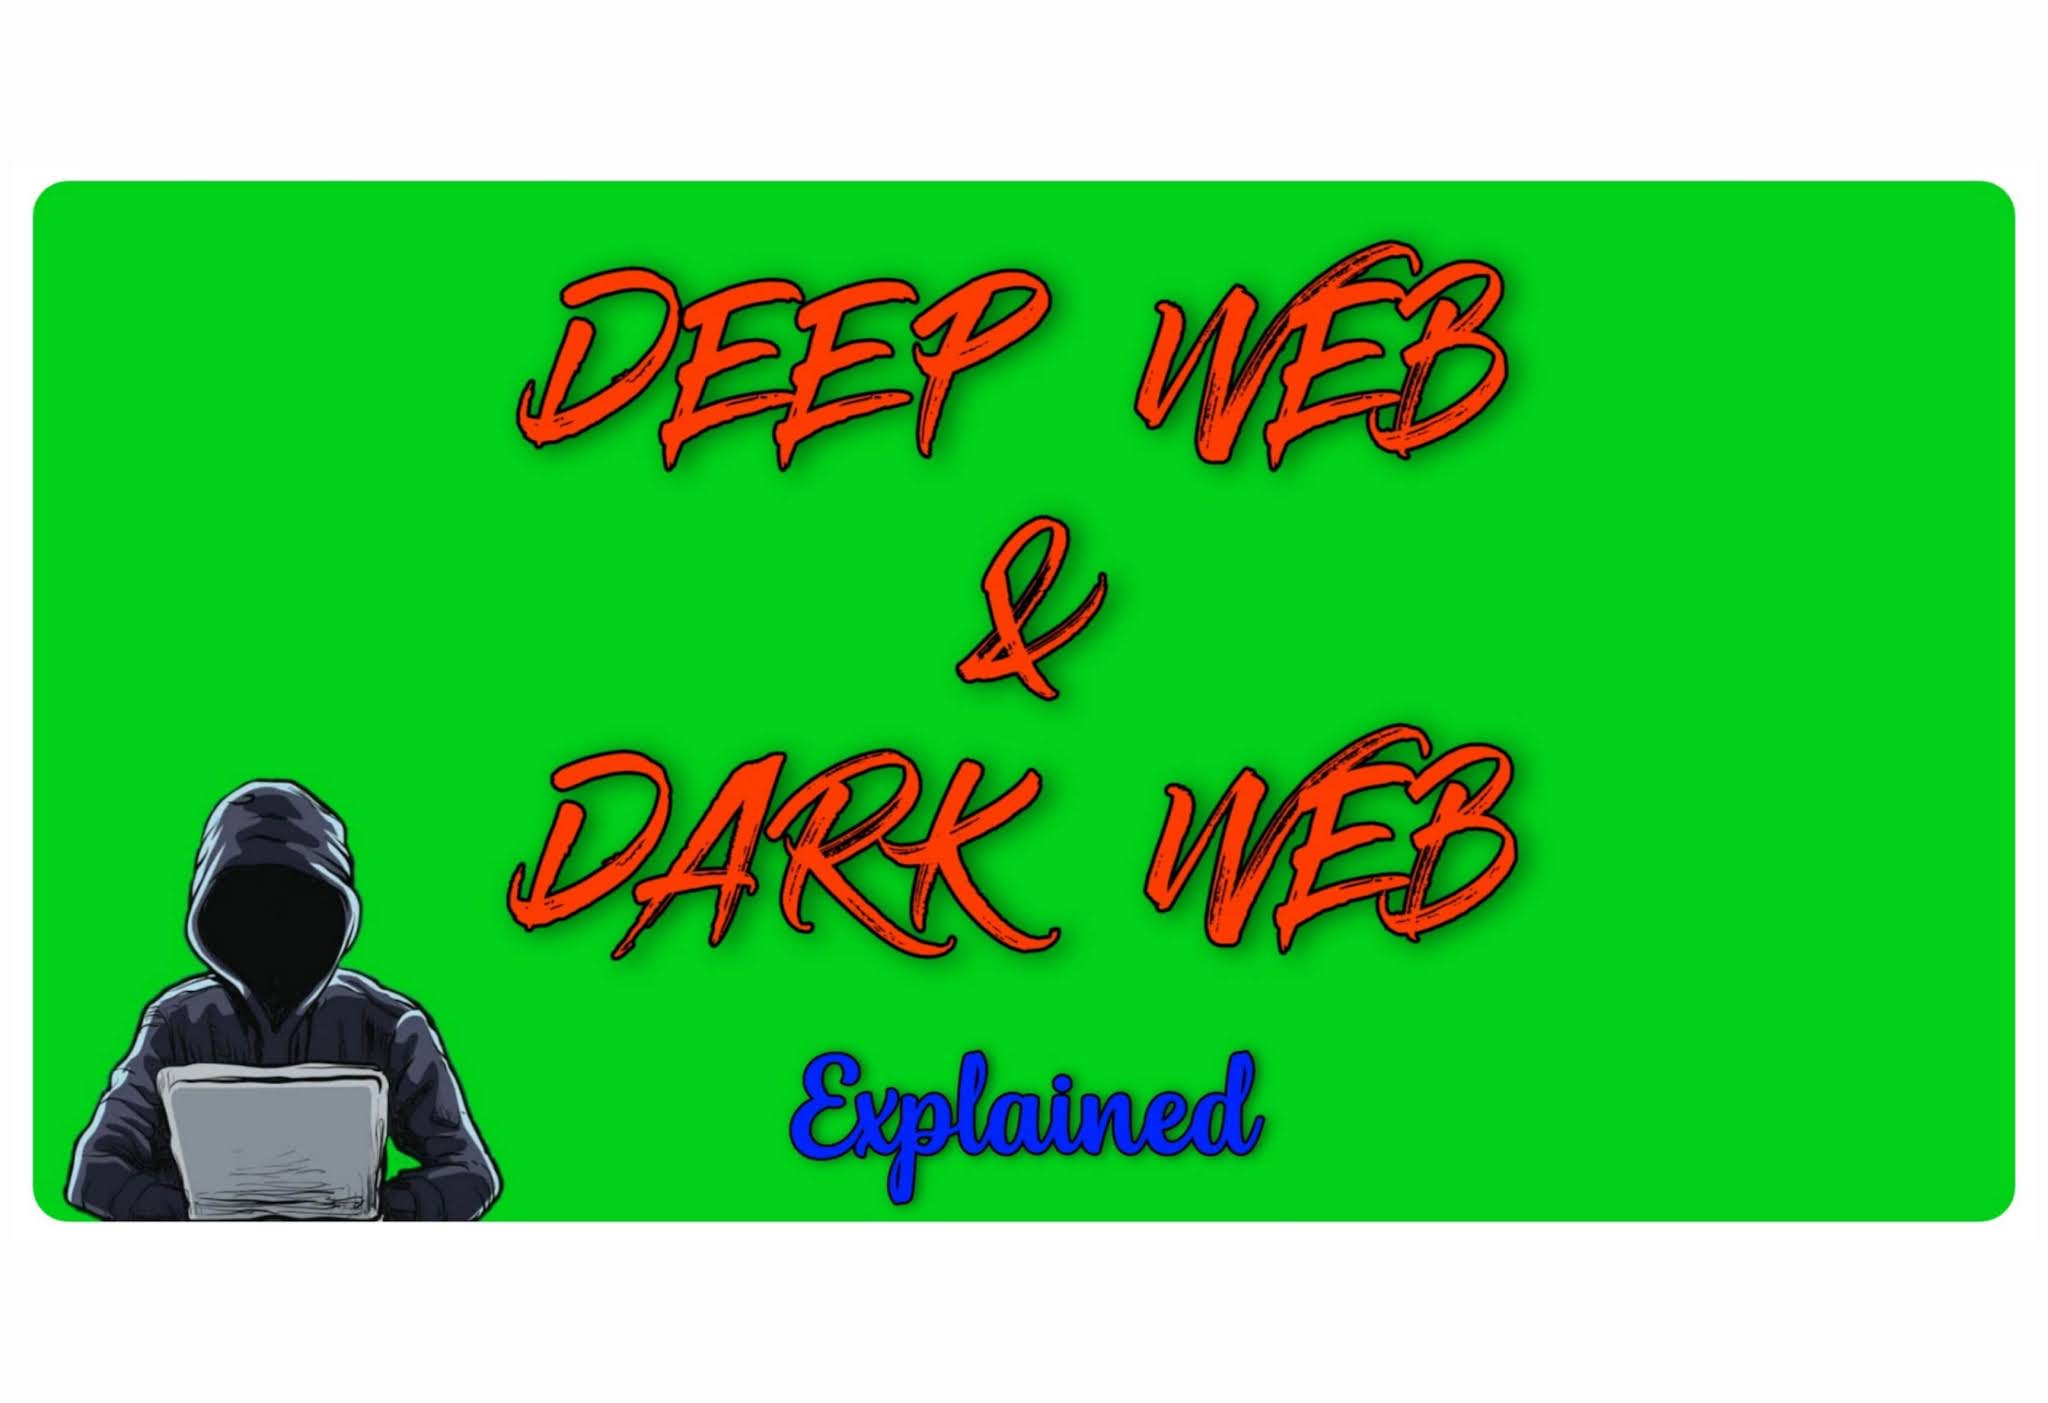 deep web and dark web explained